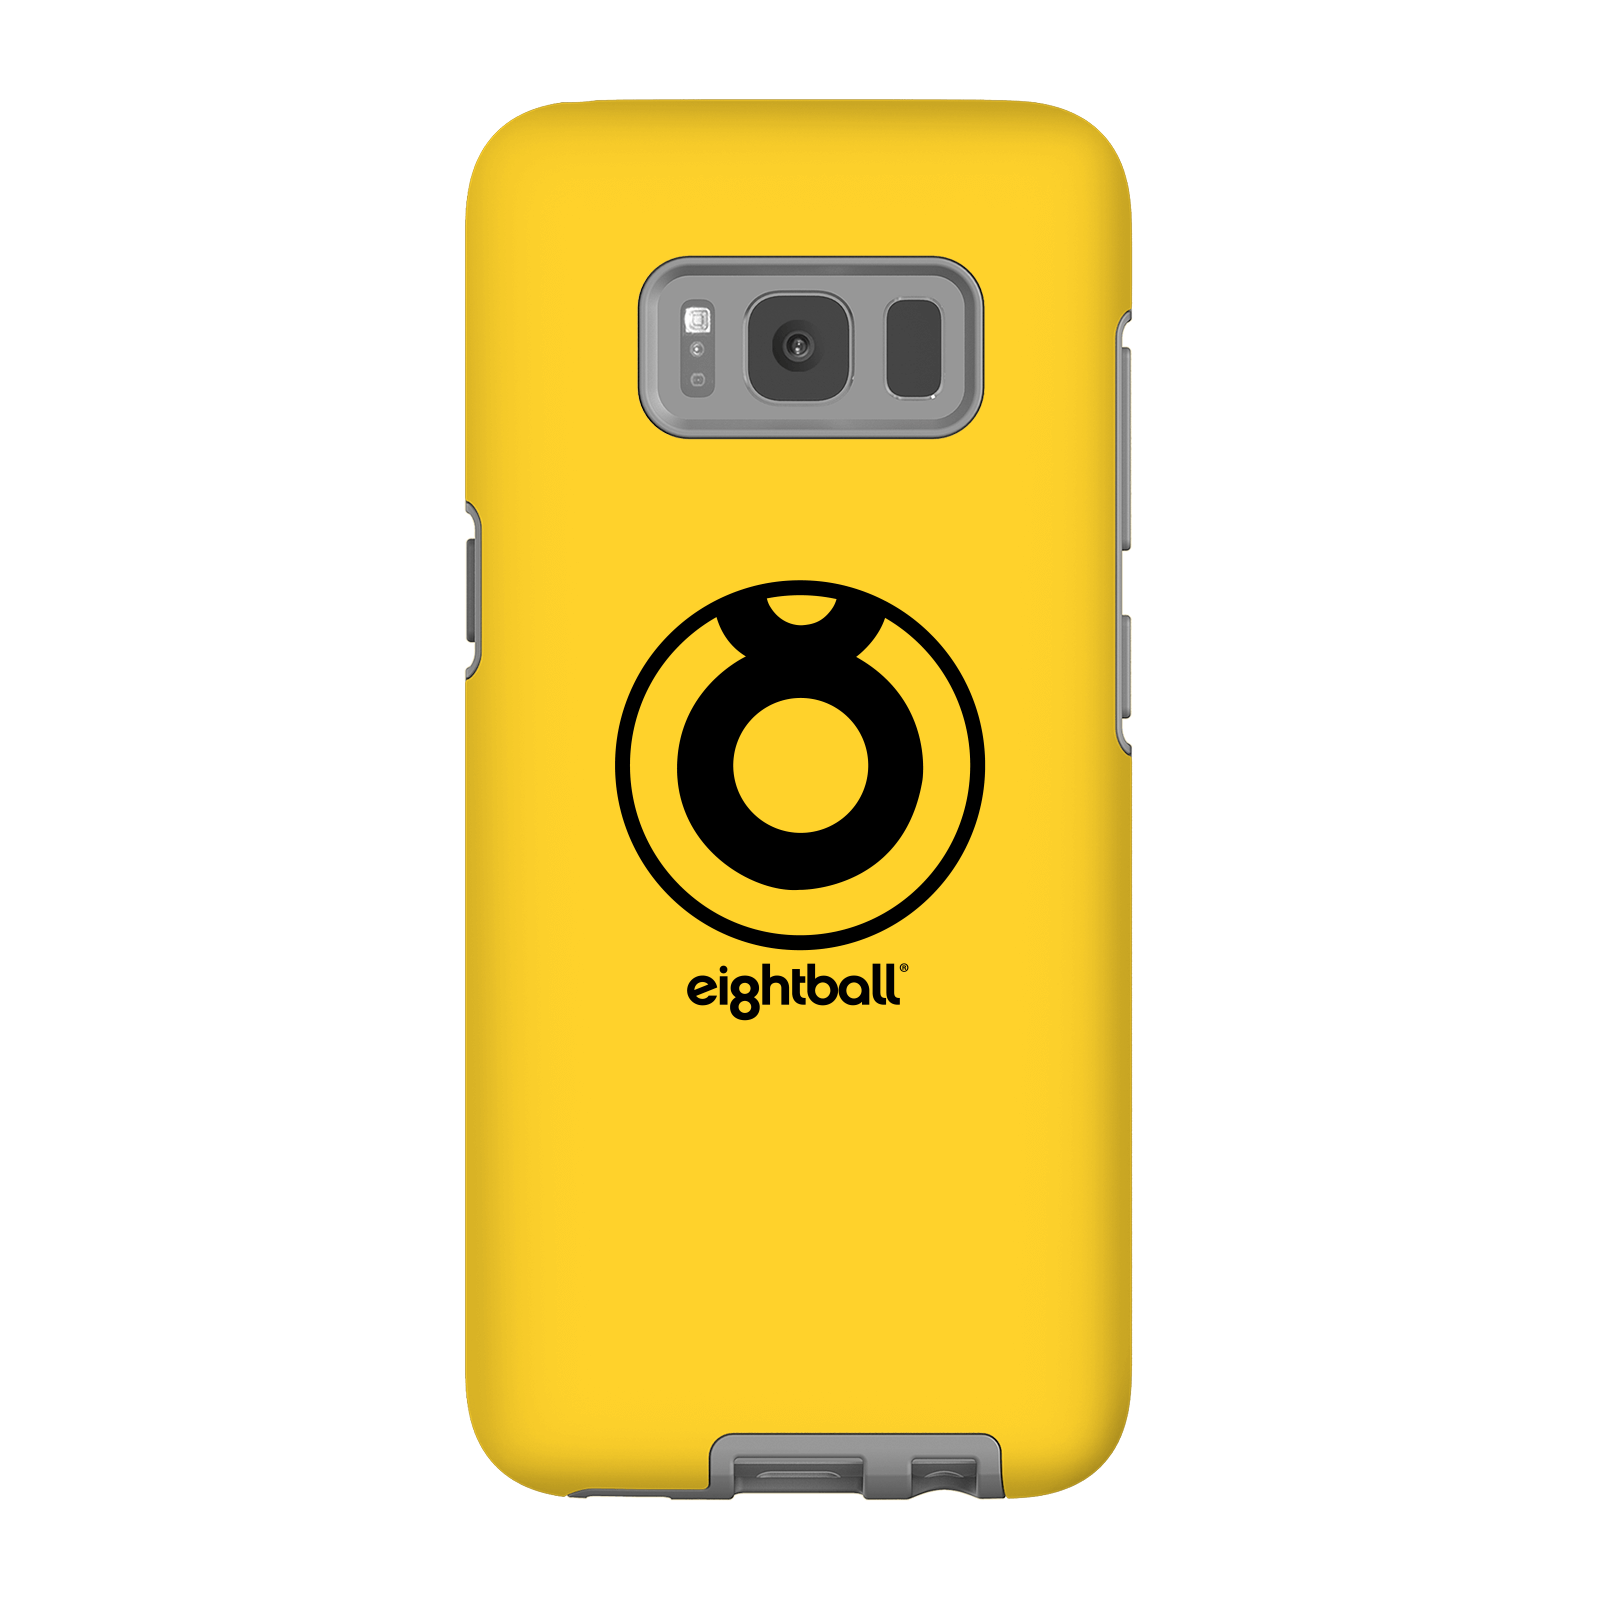 Funda Móvil Ei8htball Large Circle Logo para iPhone y Android - Samsung S8 - Carcasa doble capa - Brillante